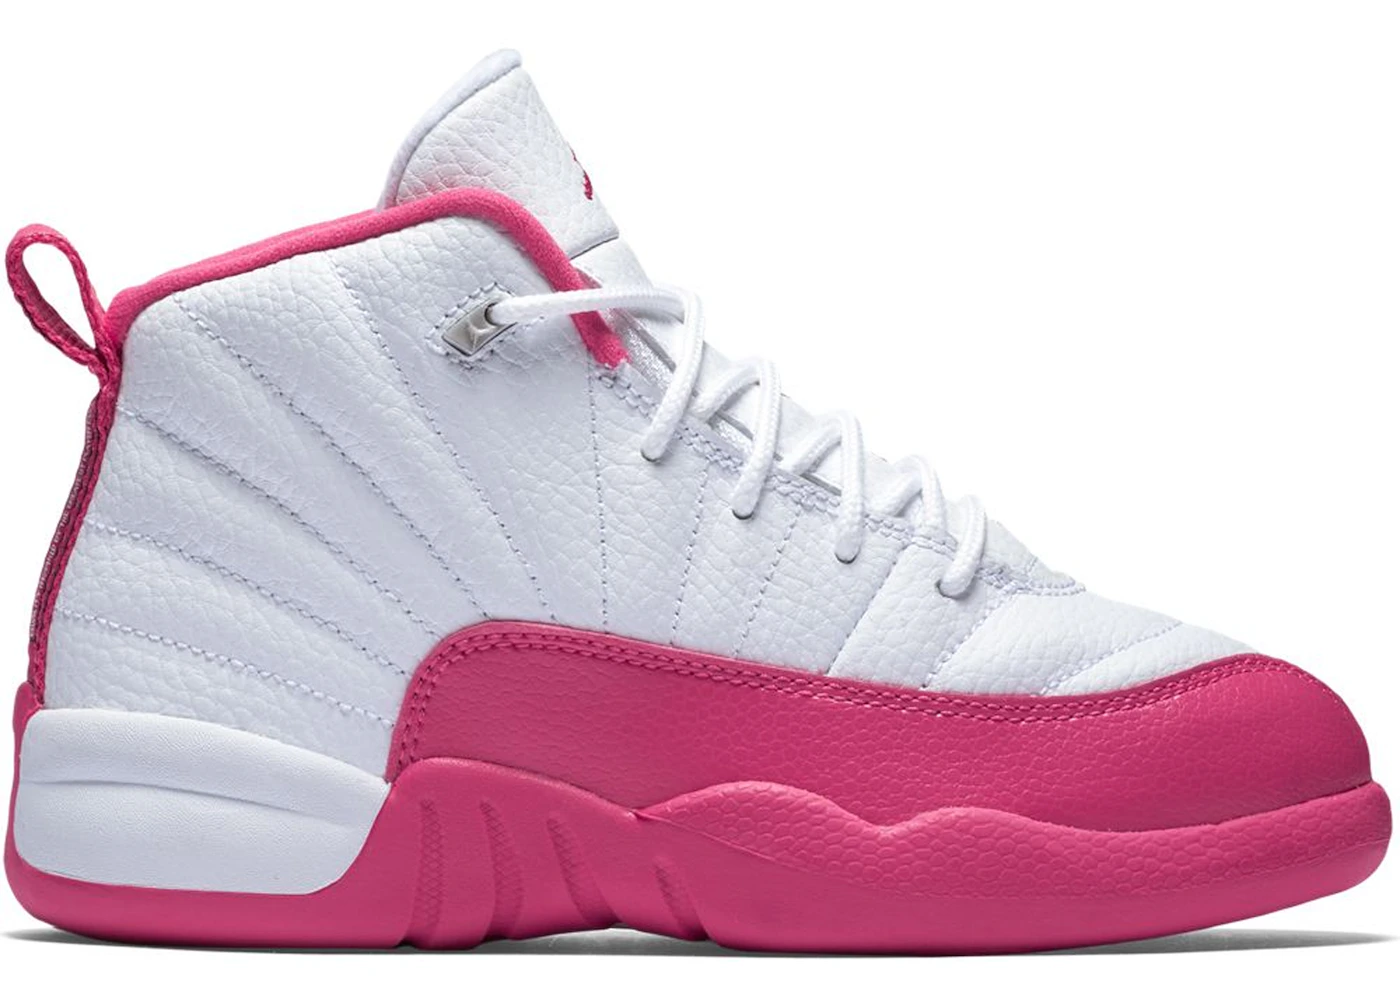 Jordan 12 Retro Dynamic Pink (PS) Kids' - 510816-109 - US